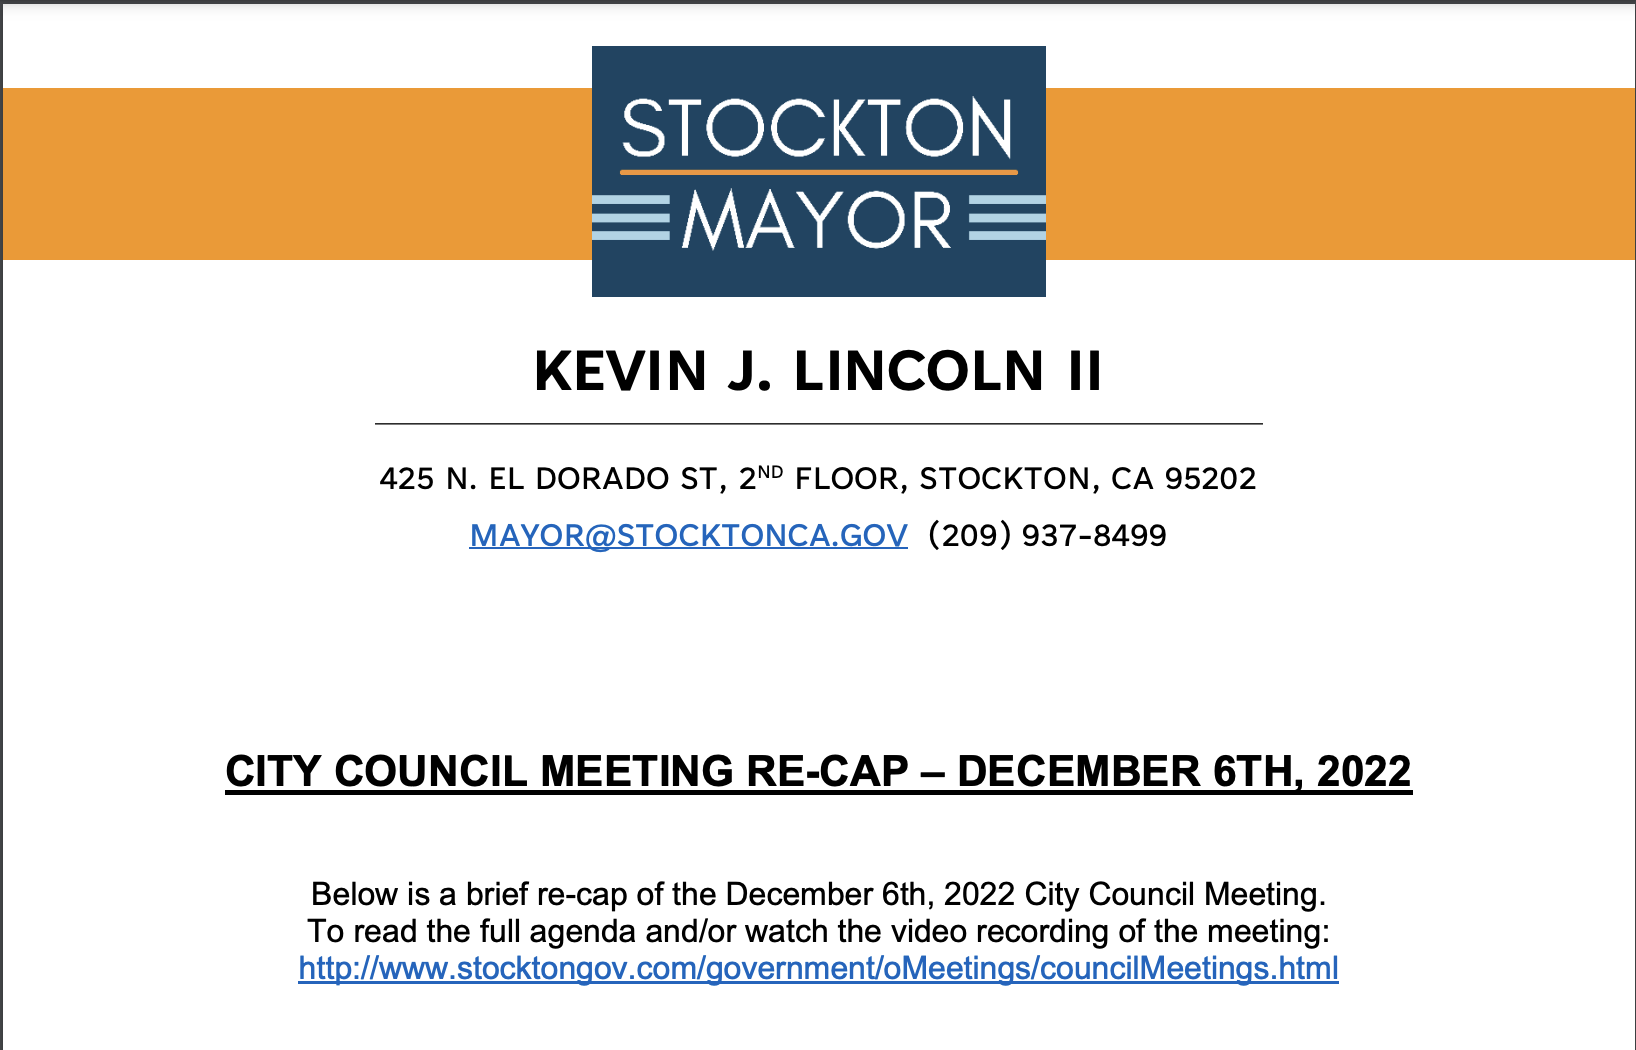 City Council Meeting Re-Cap - December 6, 2022